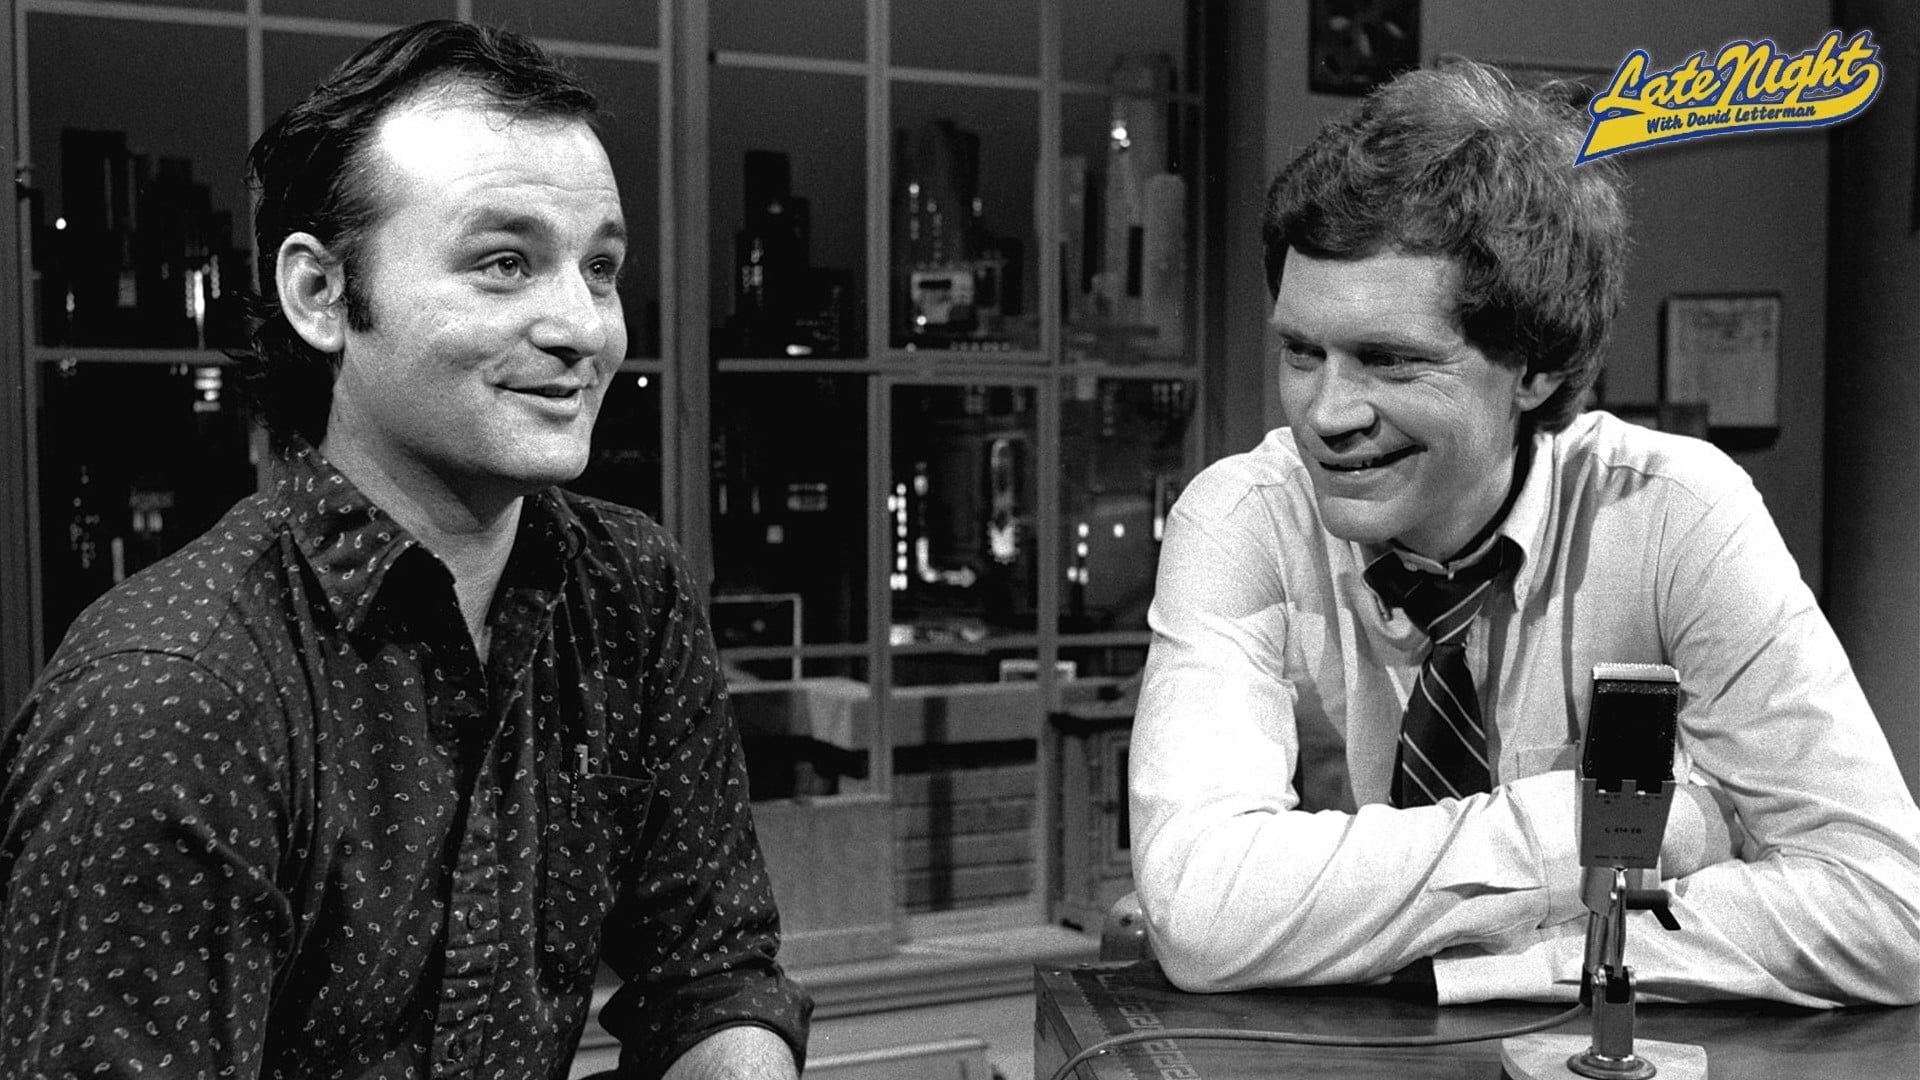 Late Night with David Letterman - Staffel 1 (1970)